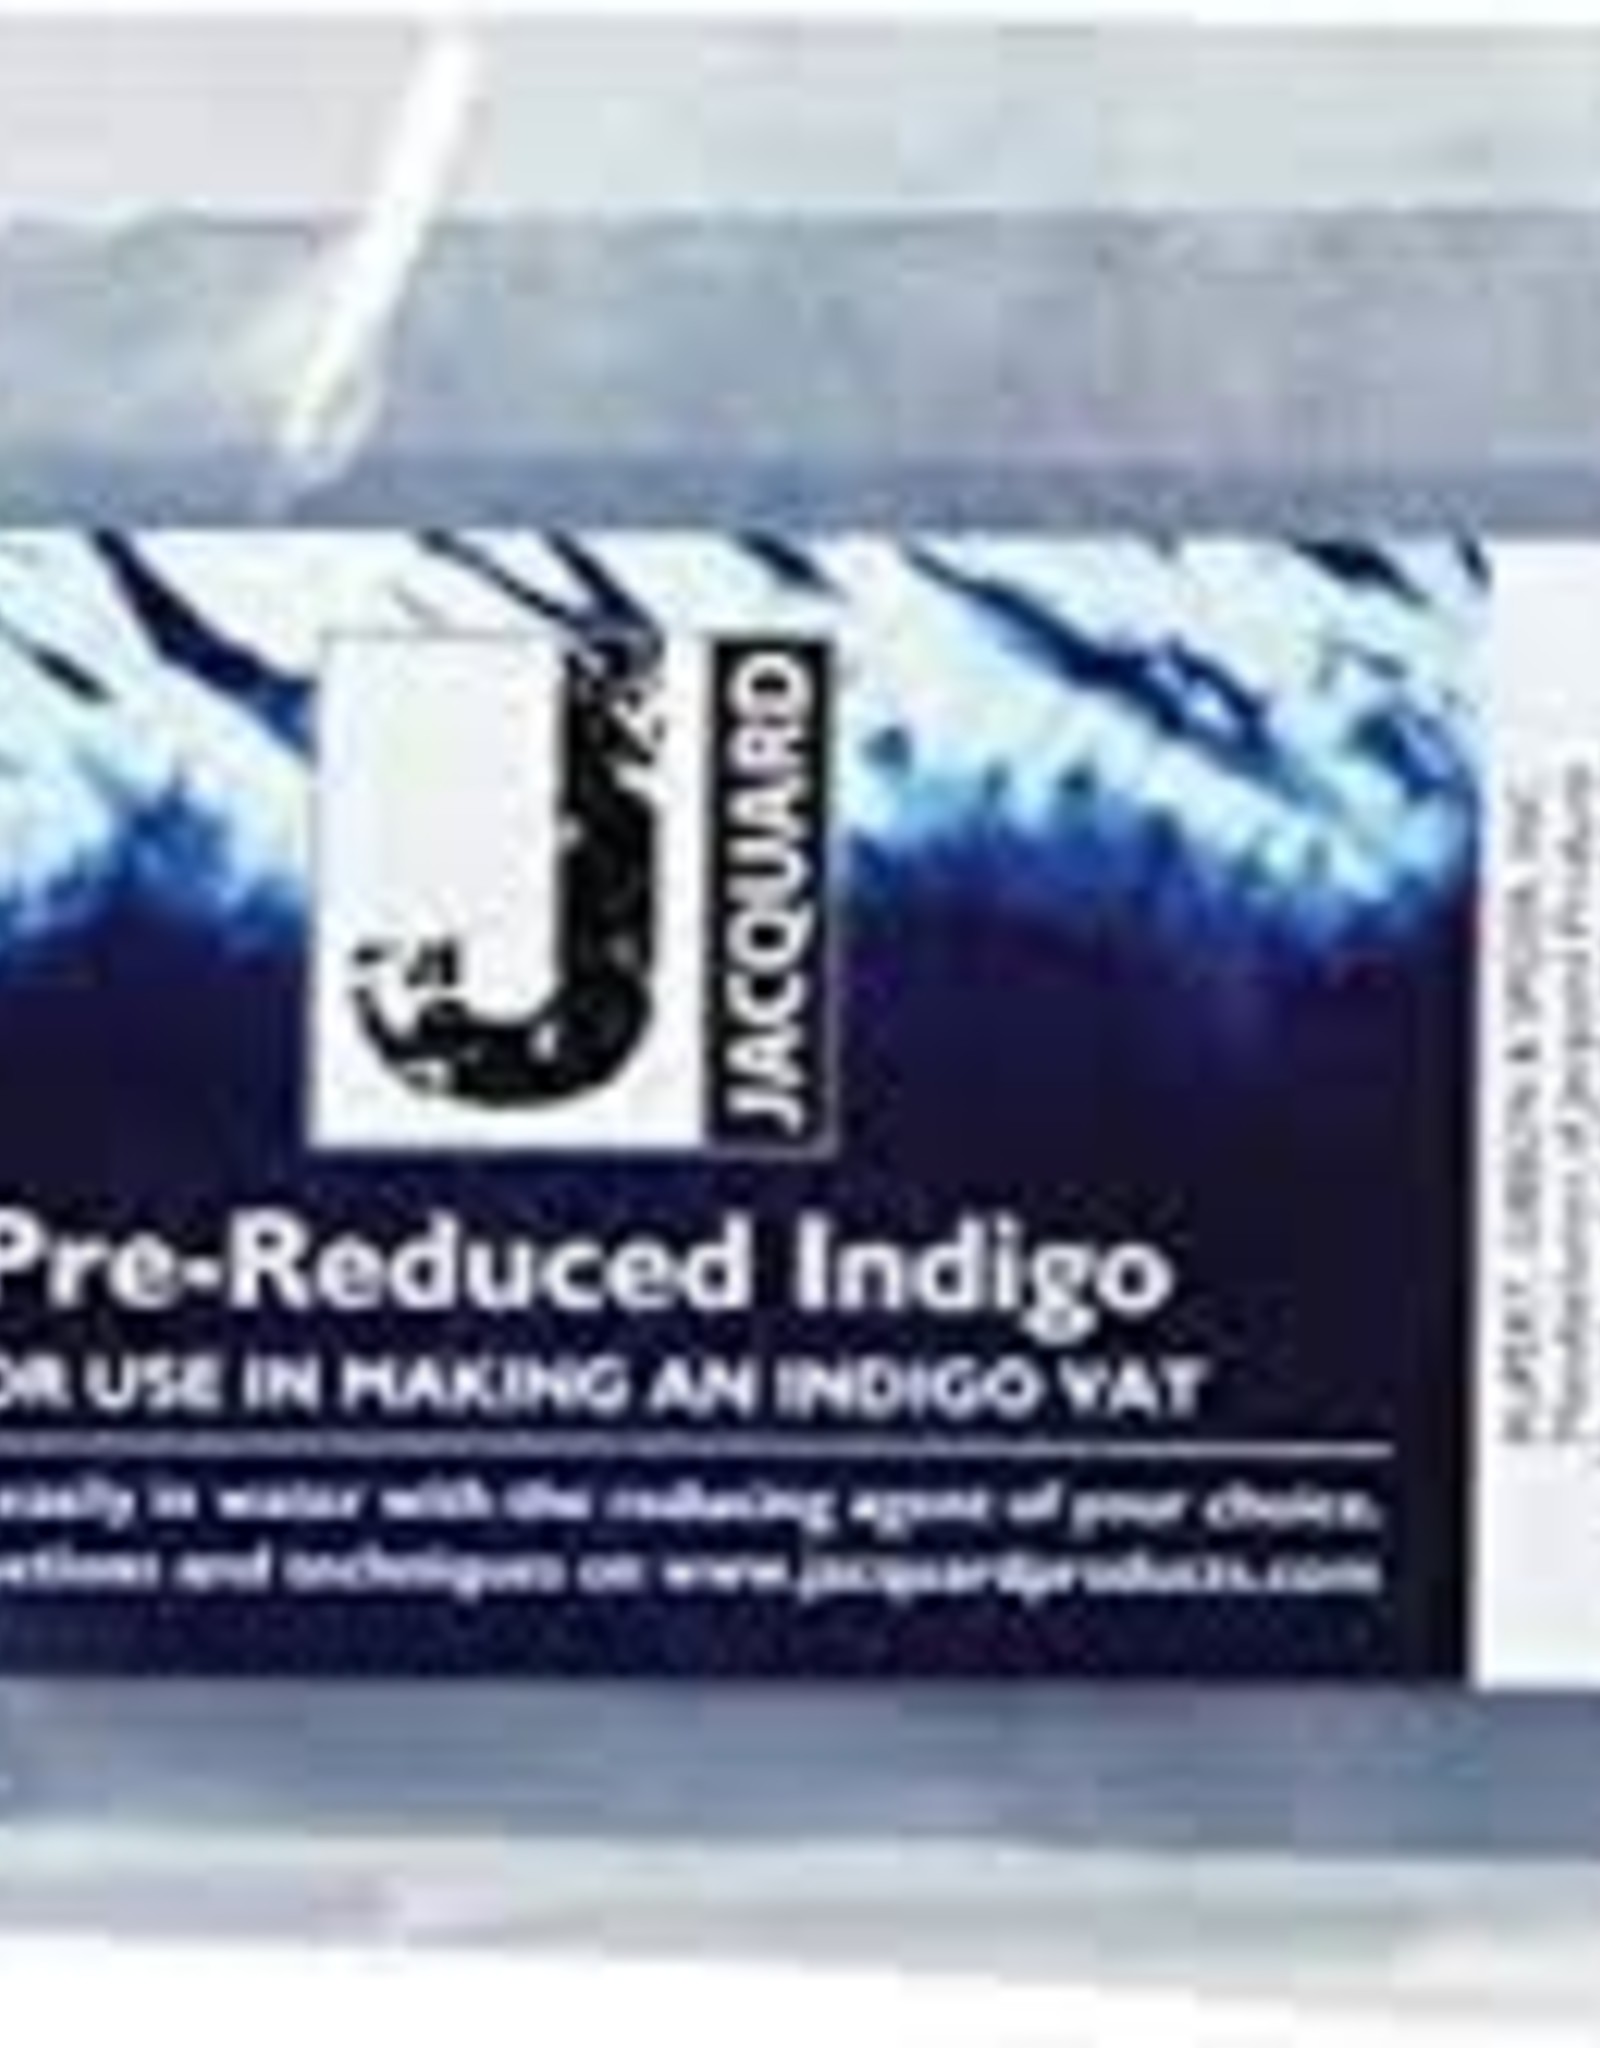 Jacquard Products Indigo vorreduziert 21 g